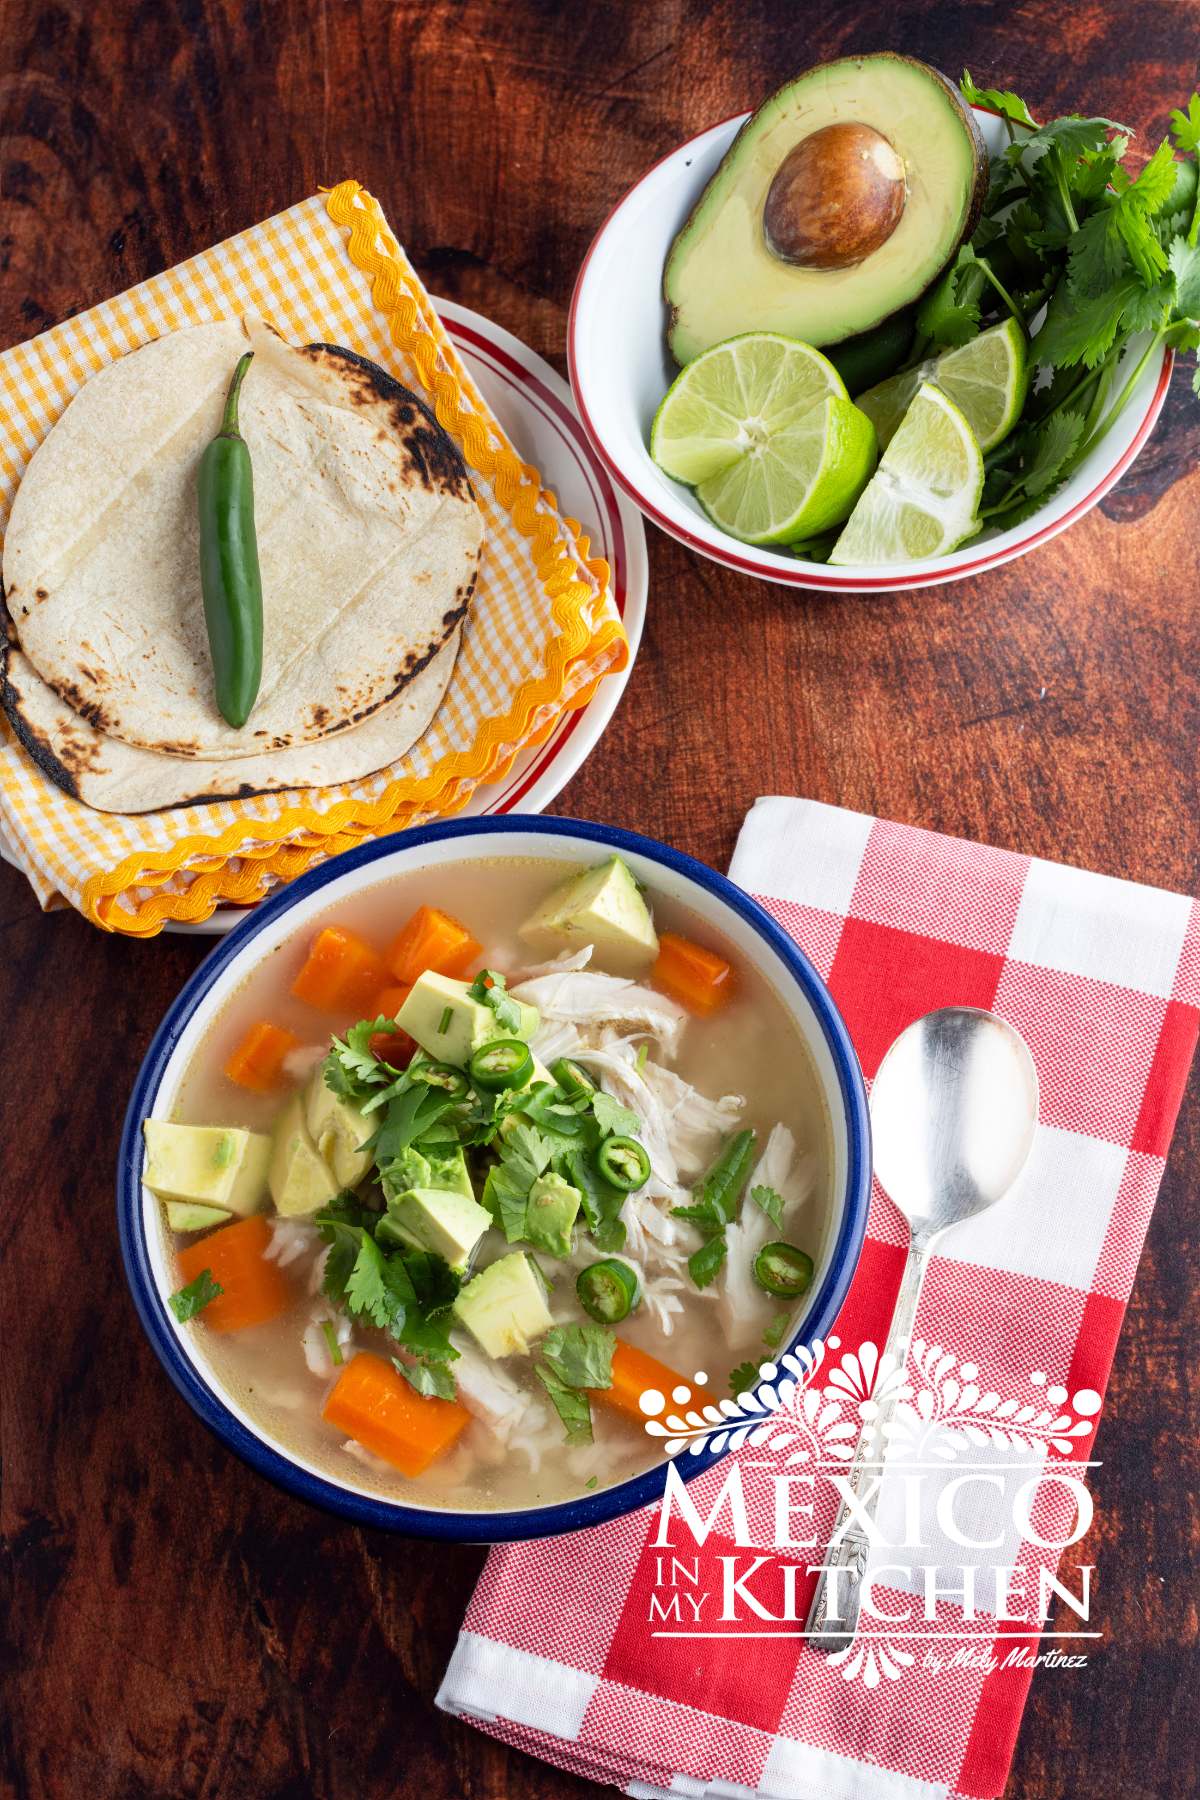 Caldo de Pollo (Mexican chicken soup) served in a white bowl, next to another bowl with avocado, cilantro and limes.